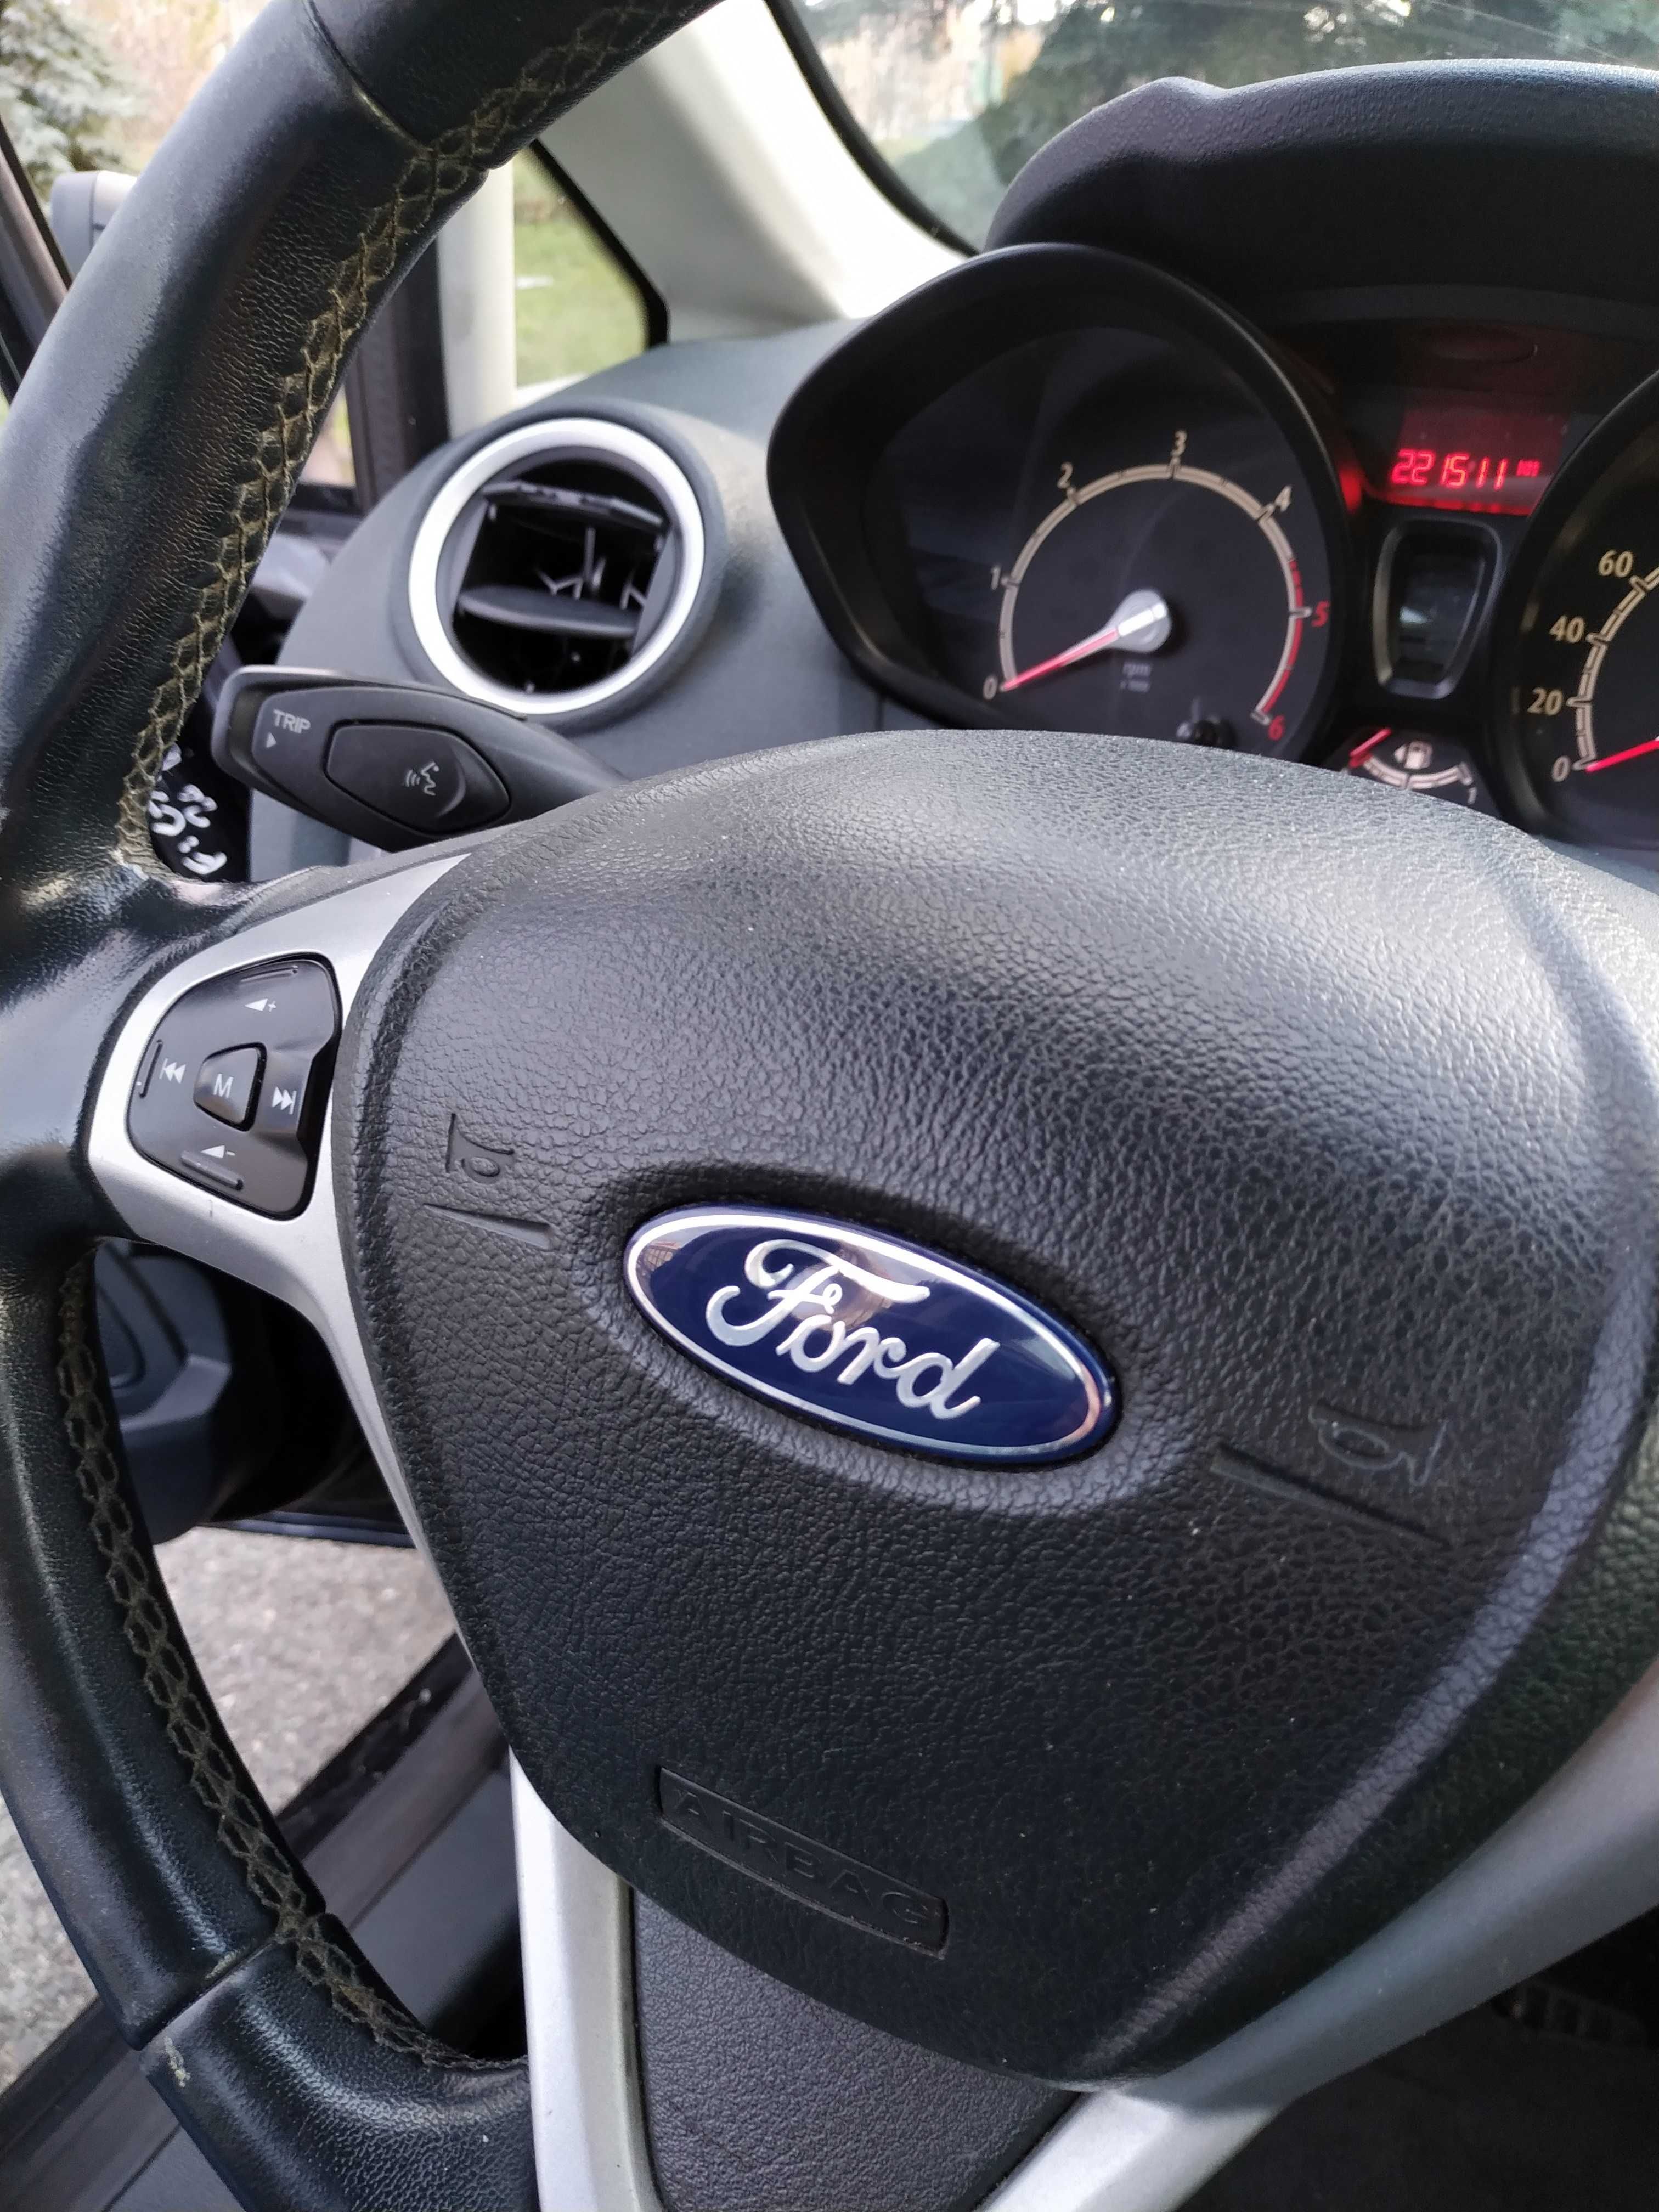 Ford Fiesta Mk7 3d, 1.6 TDCi Diesel, 2012r. Zarejestrowany